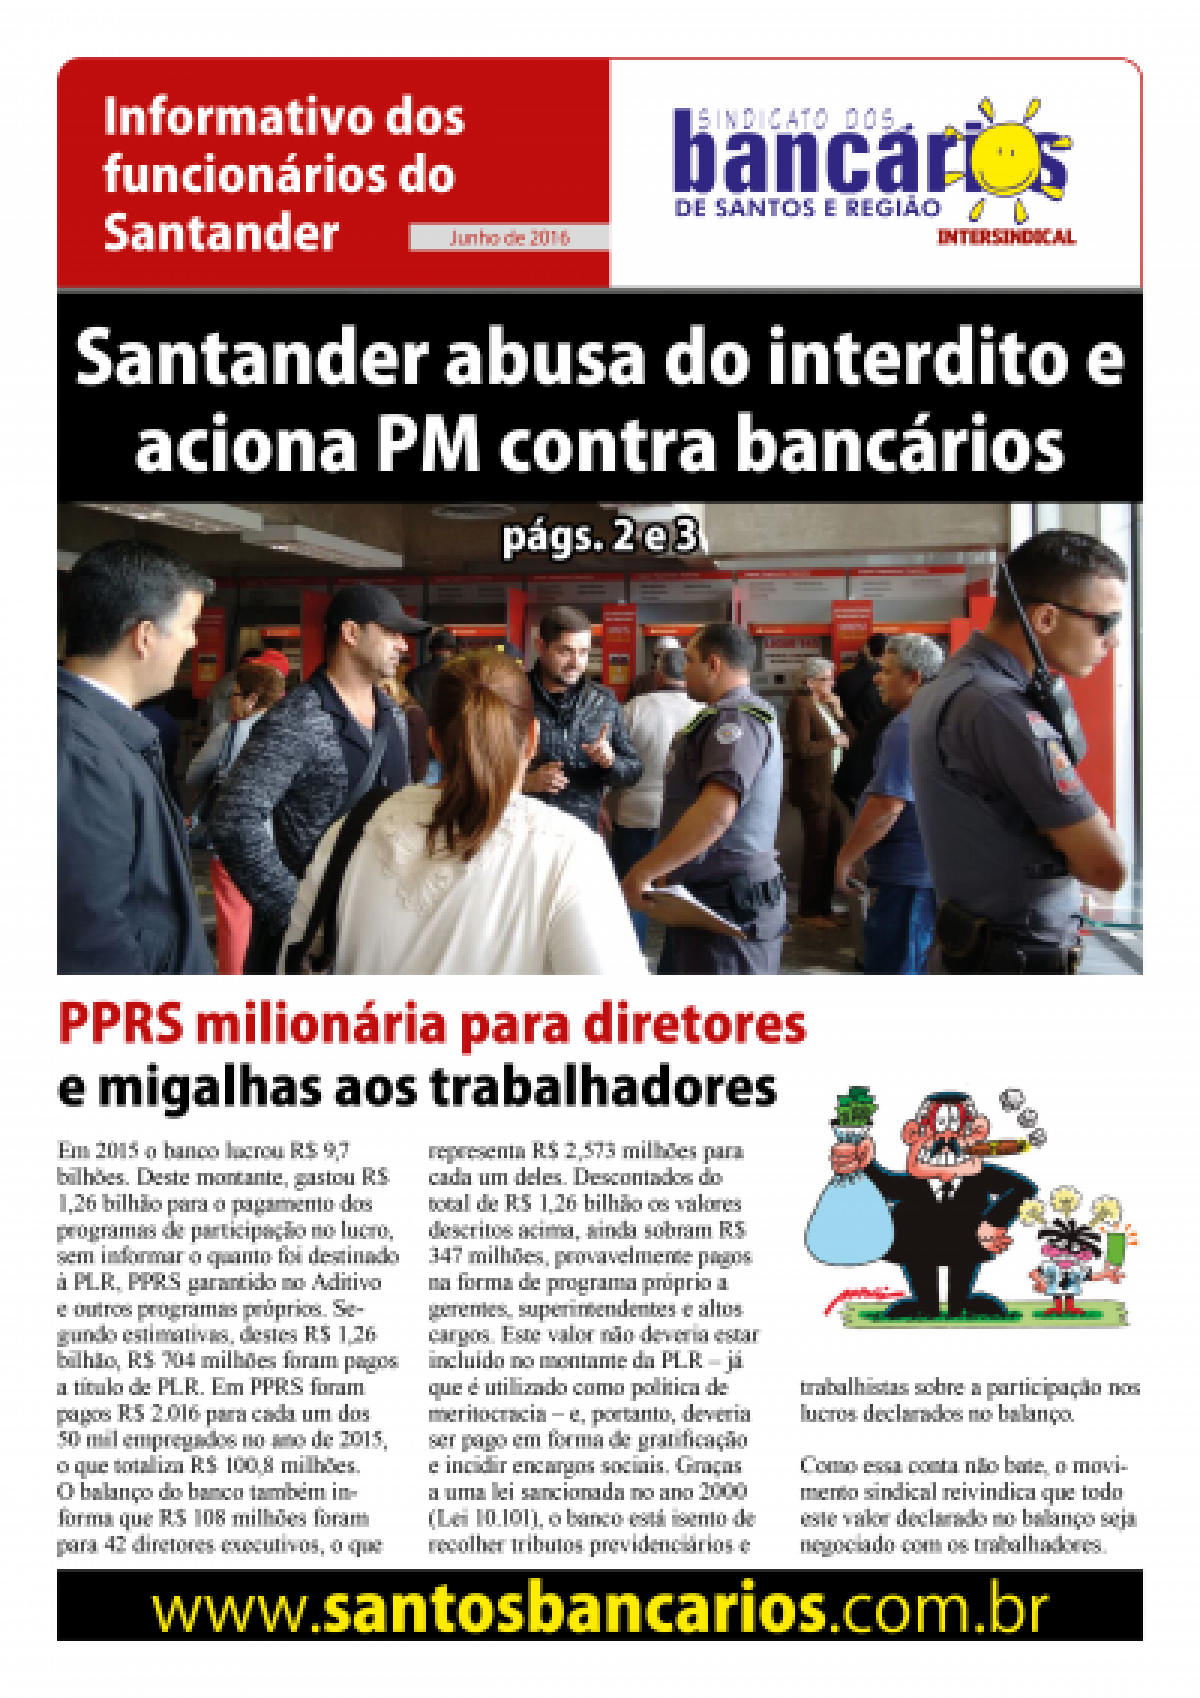 Santander abusa do interdito e aciona PM contra bancários